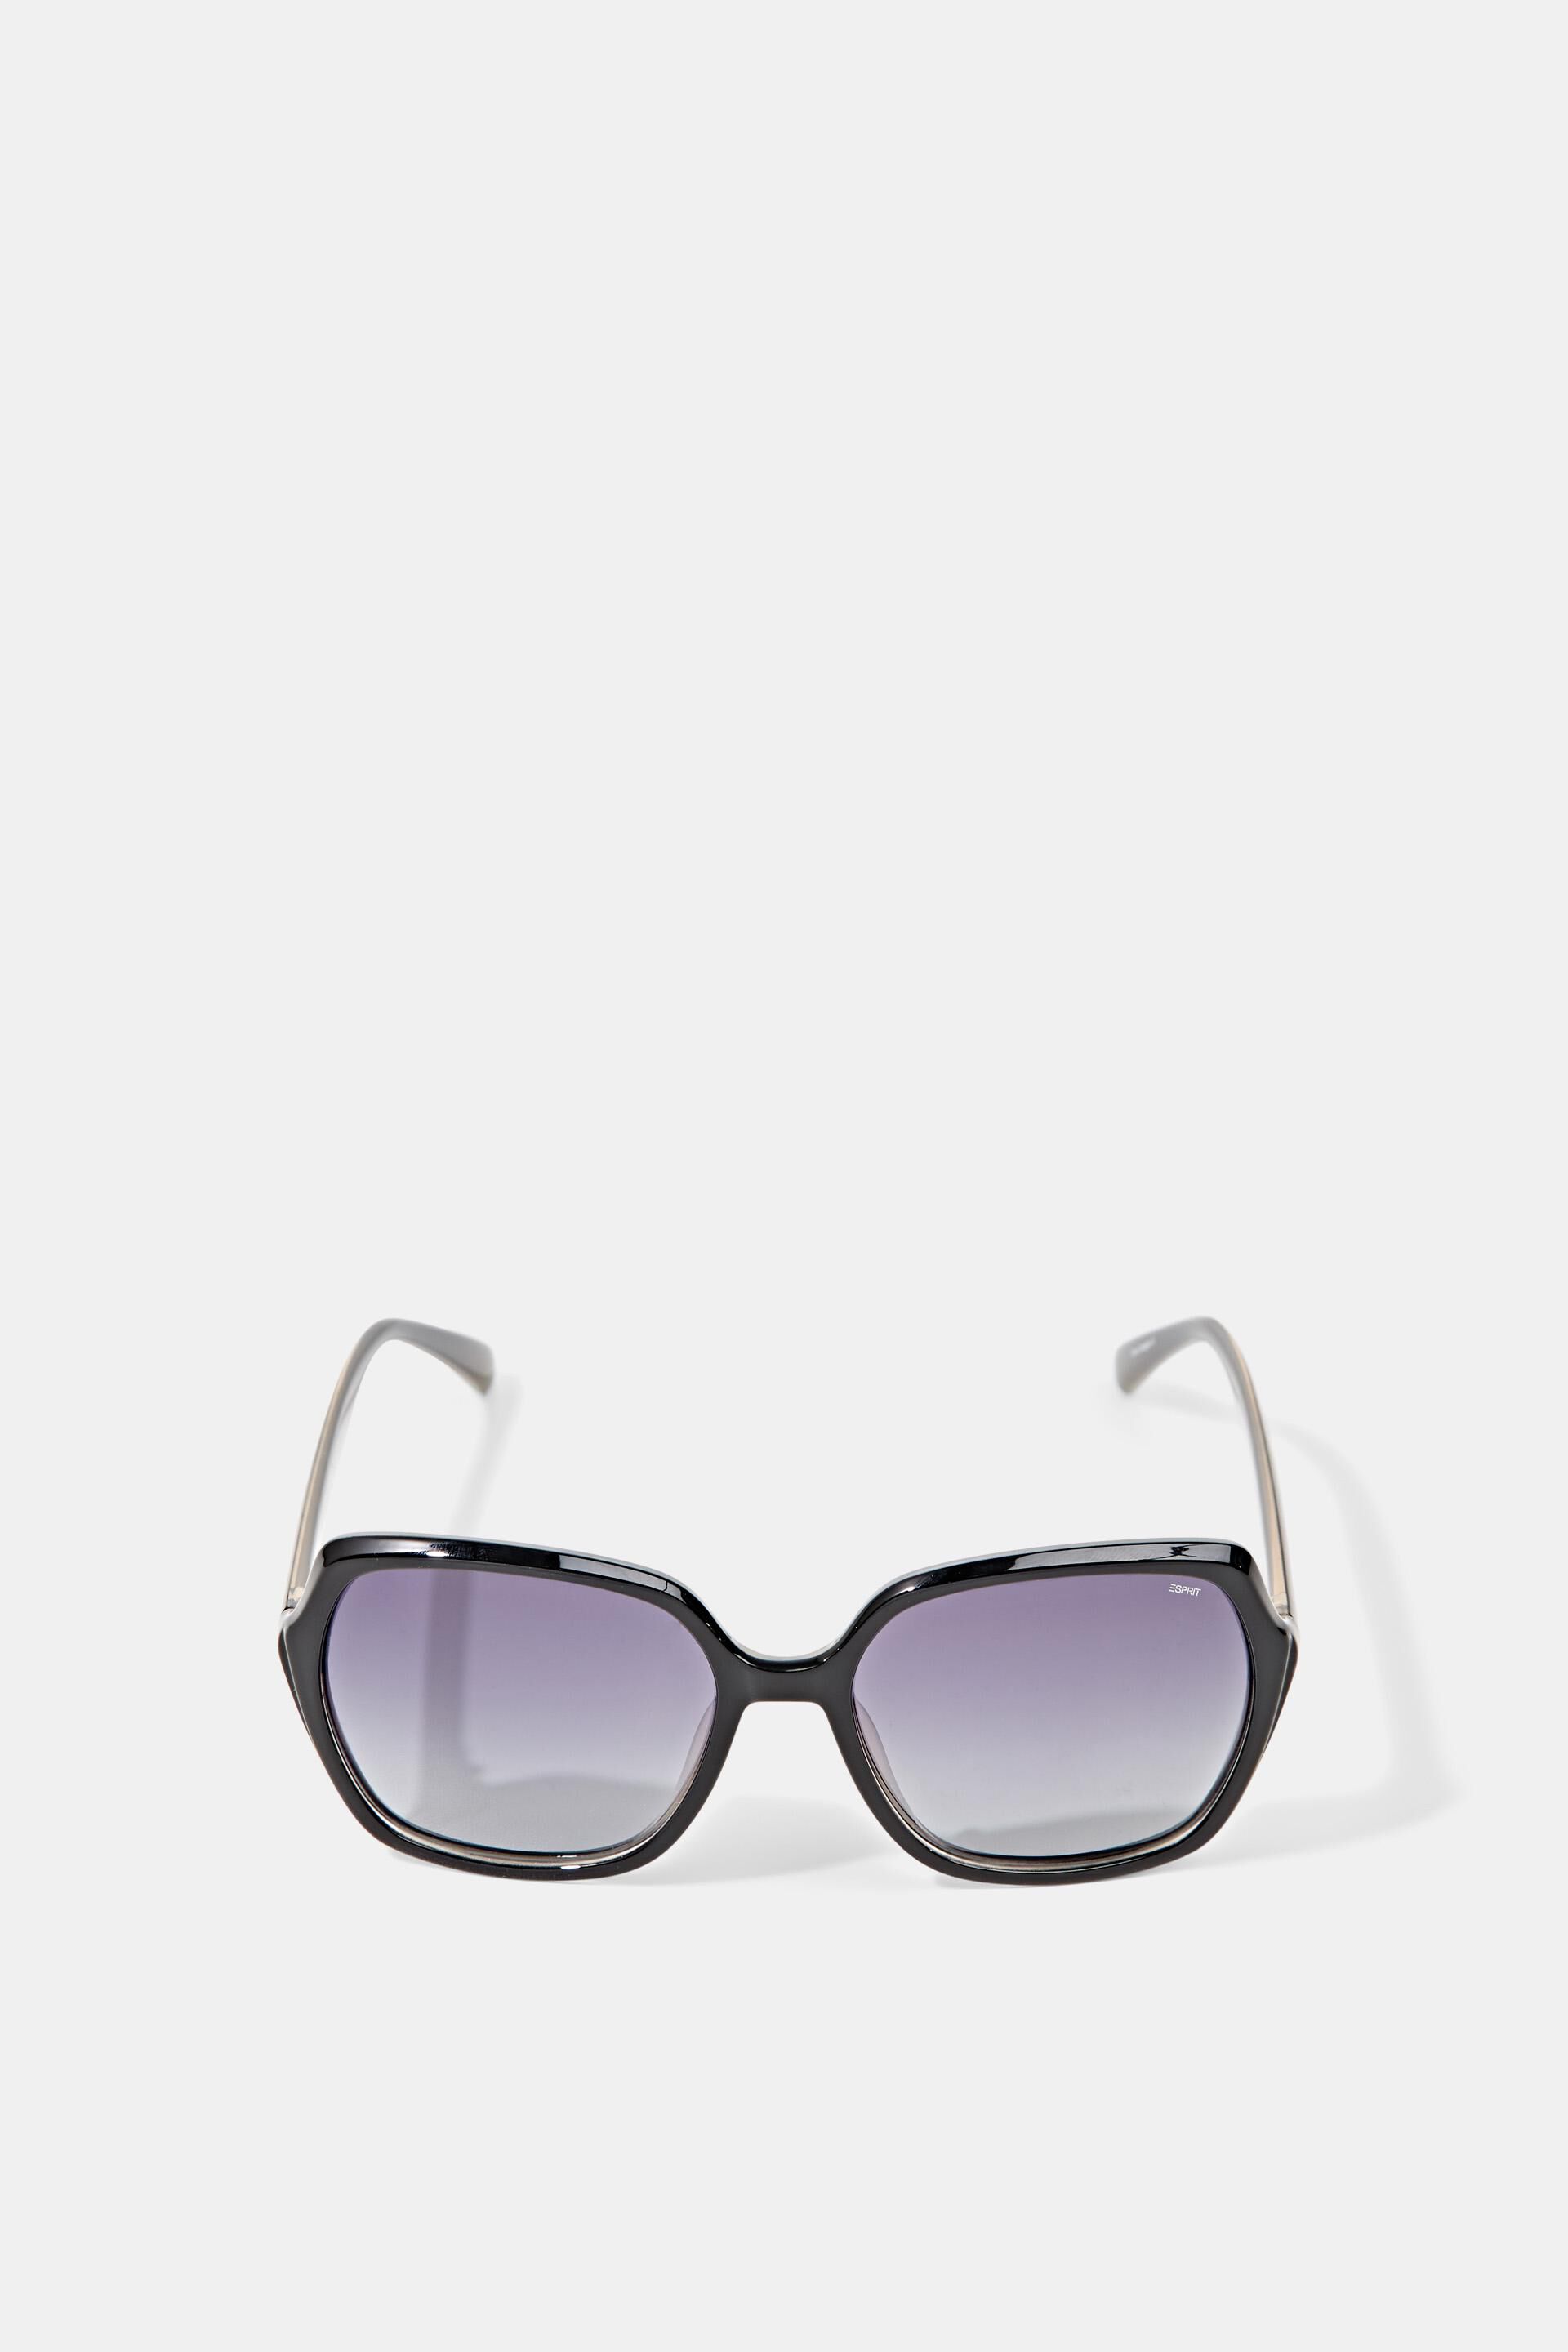 Esprit Statement large sunglasses with lenses